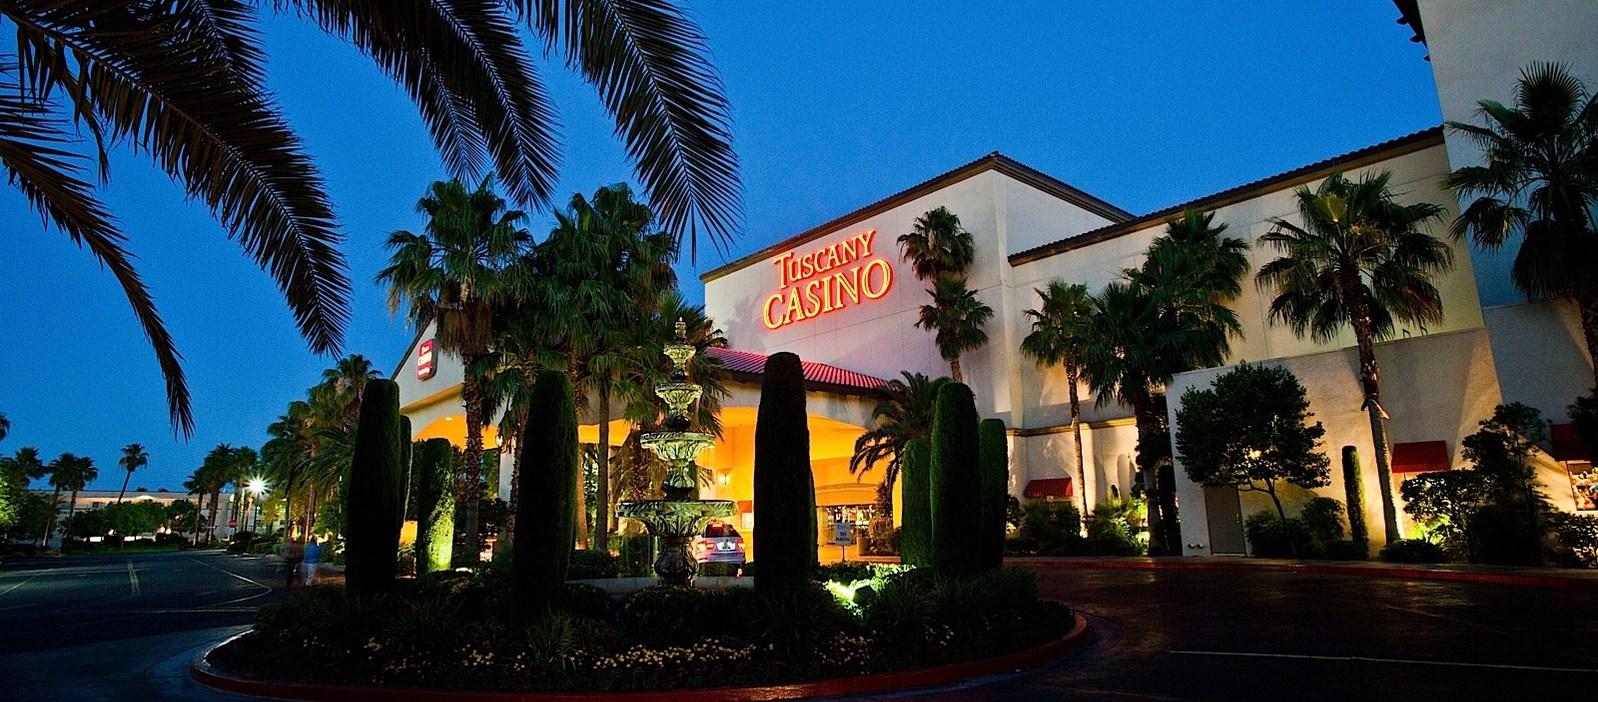 tuscany suites casino trip advisor